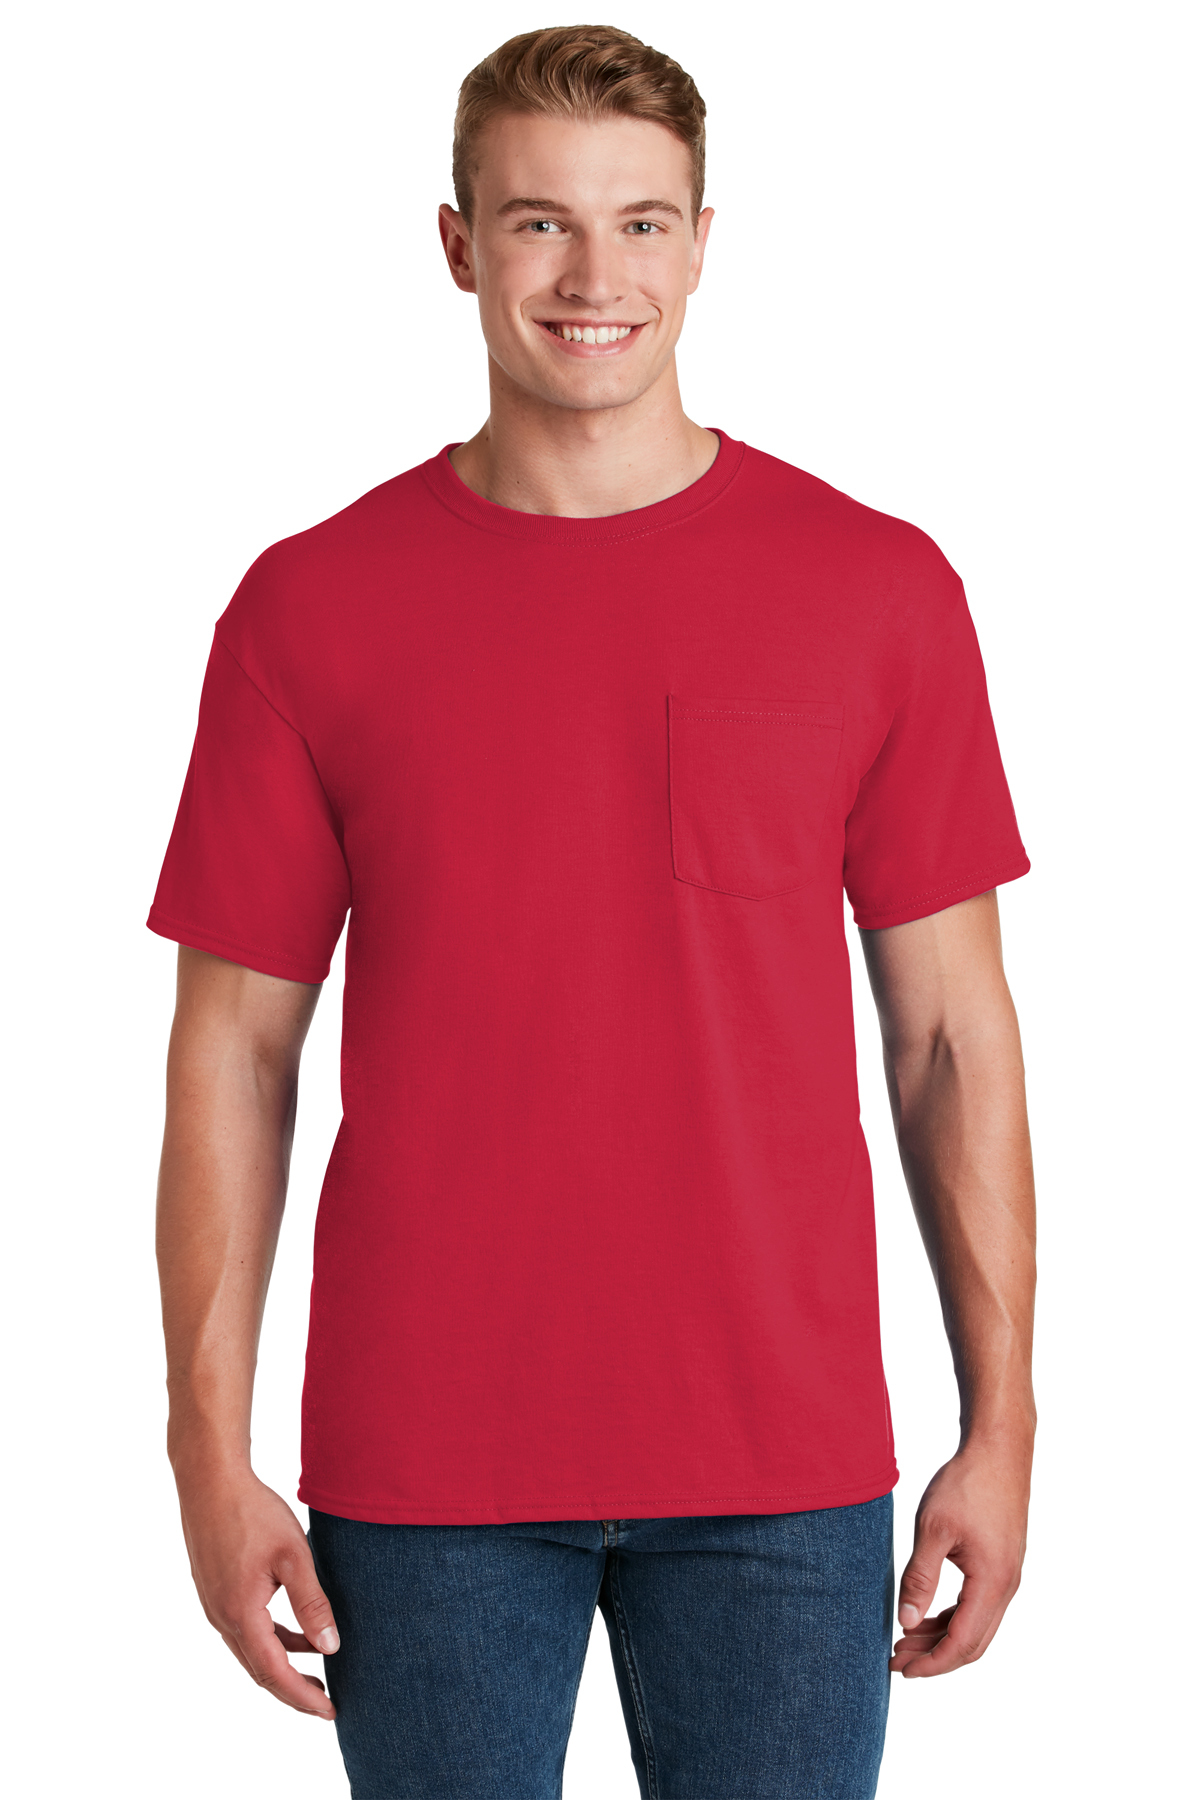 JERZEES - Dri-Power 50/50 Cotton/Poly Pocket T-Shirt | Product | SanMar